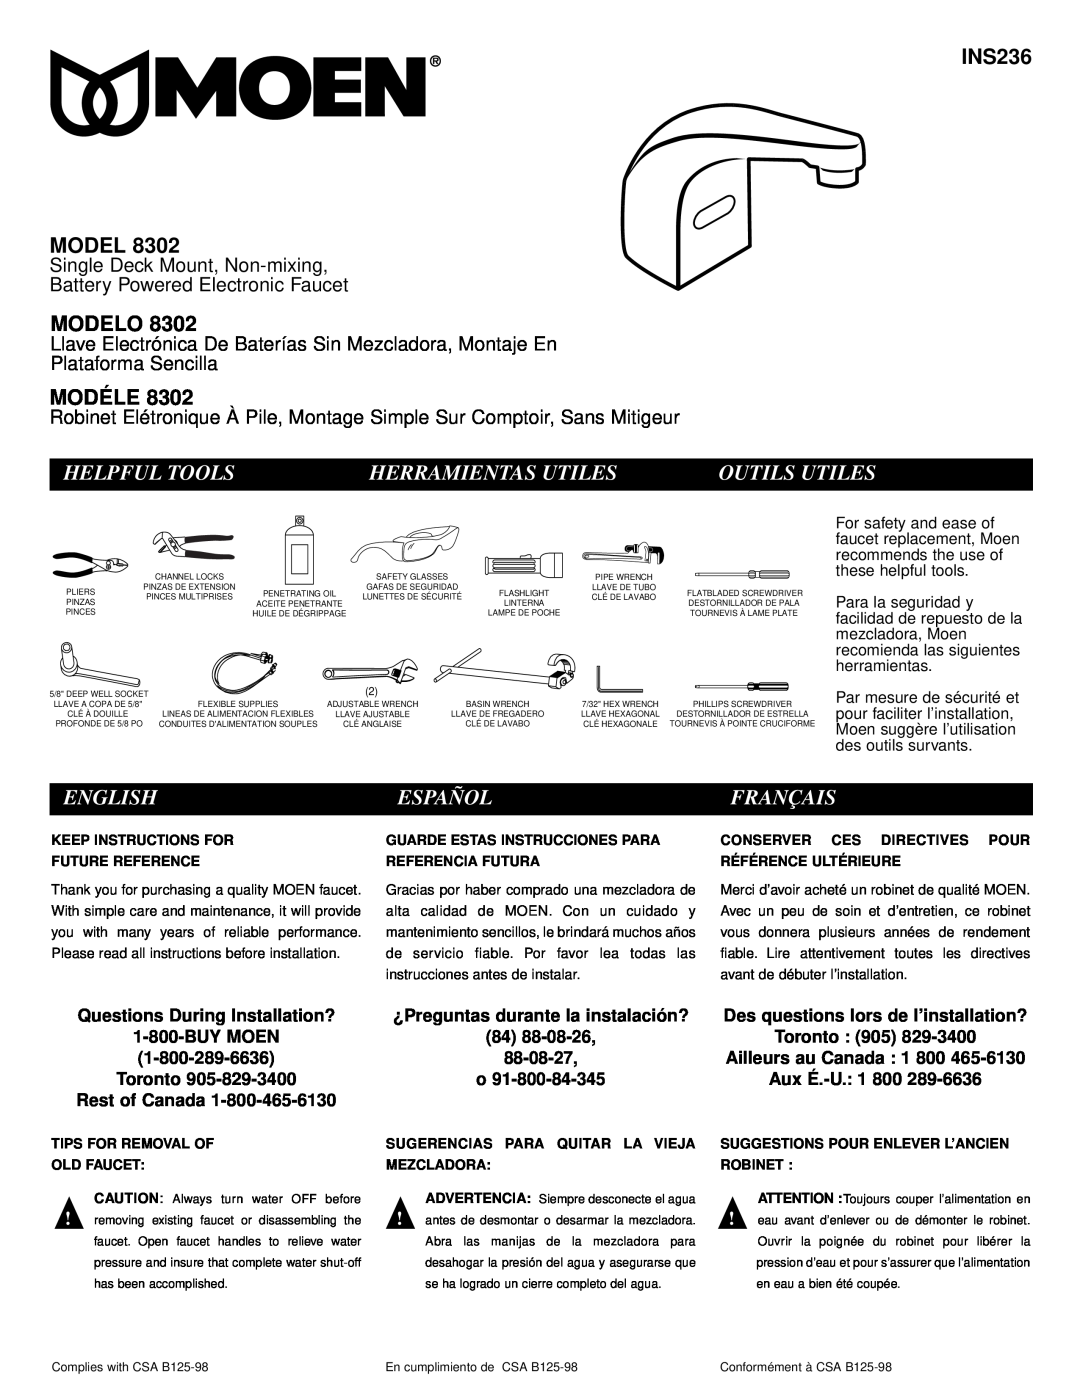 Moen 8302 manual Helpful Tools, Herramientas Utiles, Outils Utiles, English, Español, Français, Plataforma Sencilla 